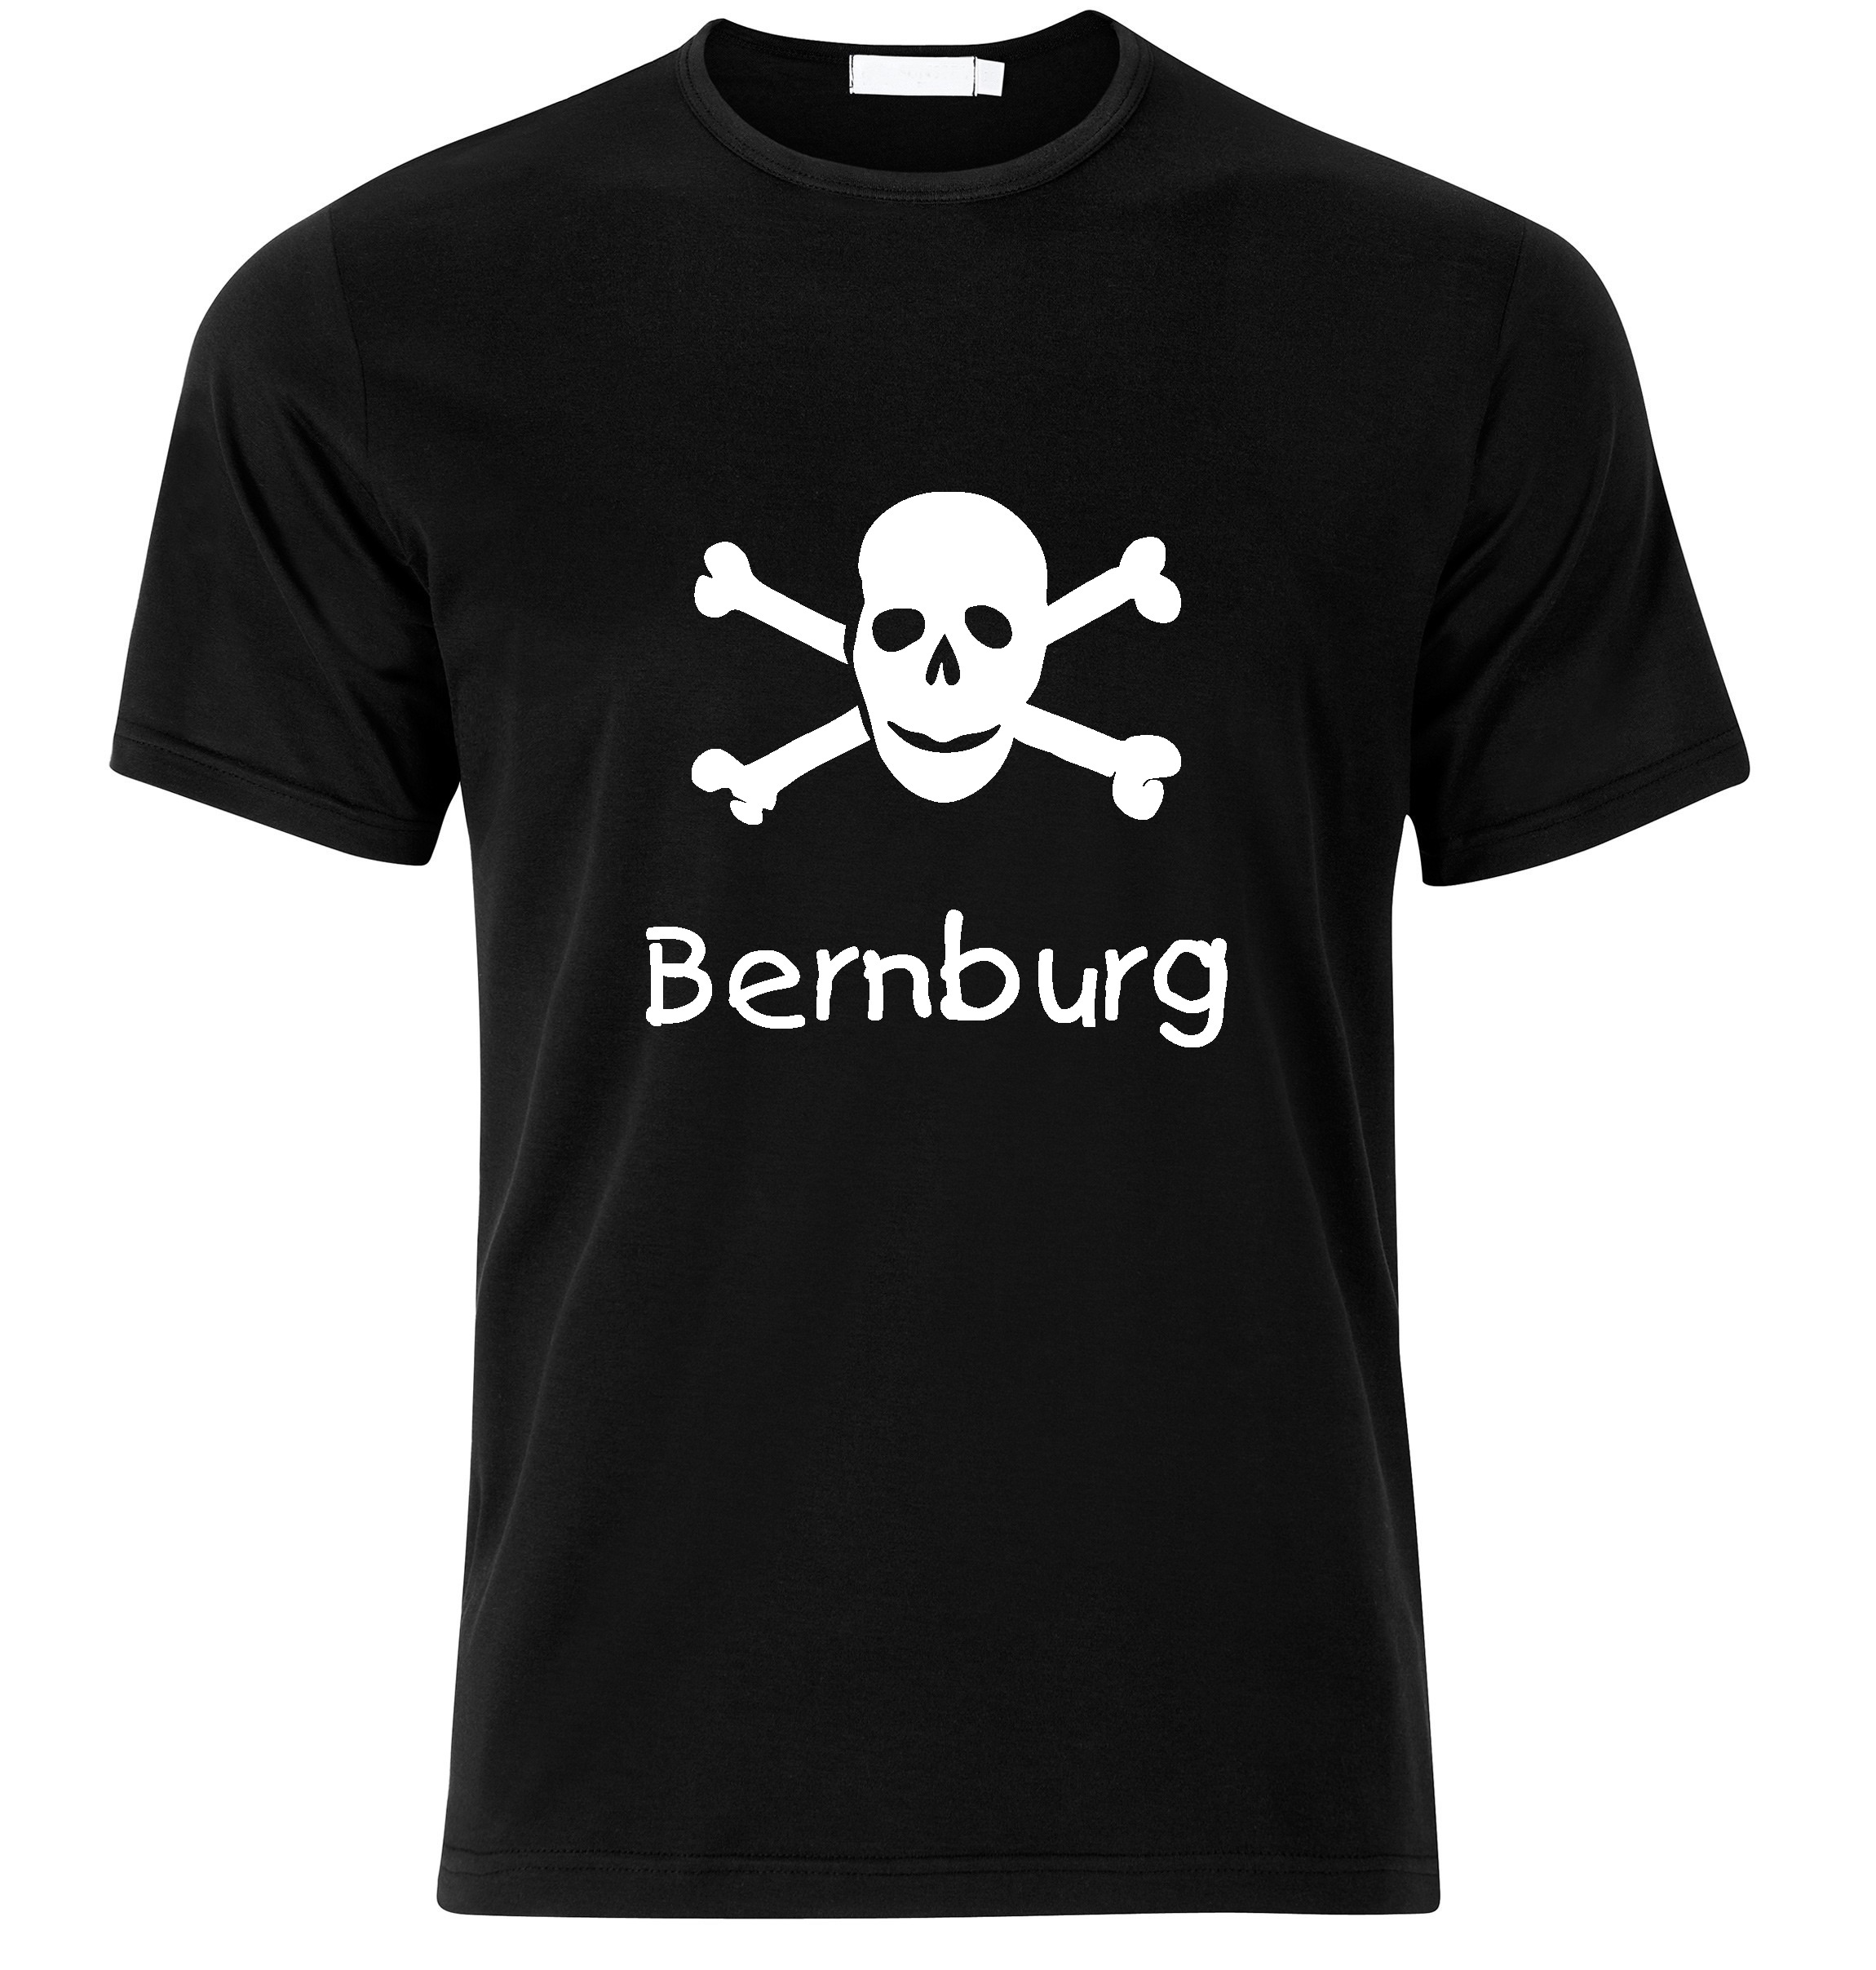 T-Shirt Bernburg Jolly Roger, Totenkopf